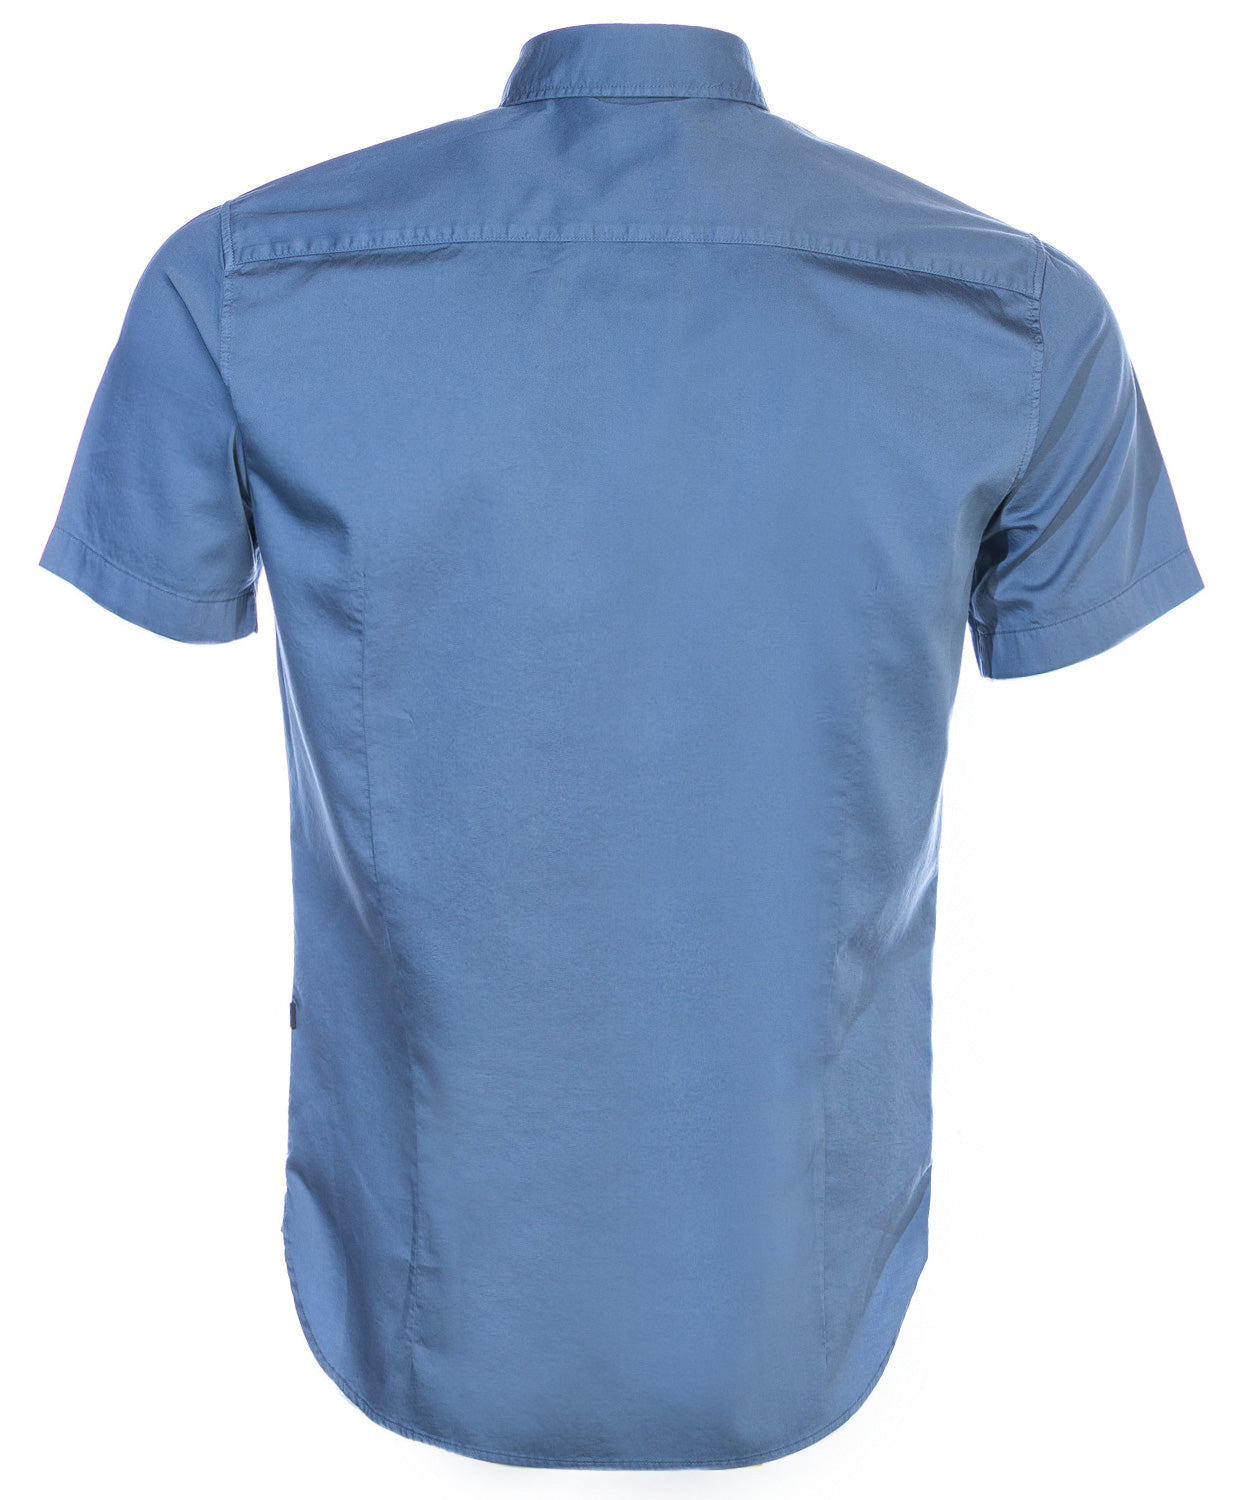 BOSS Magneton 1 Short Short Sleeve Shirt in Mid Blue